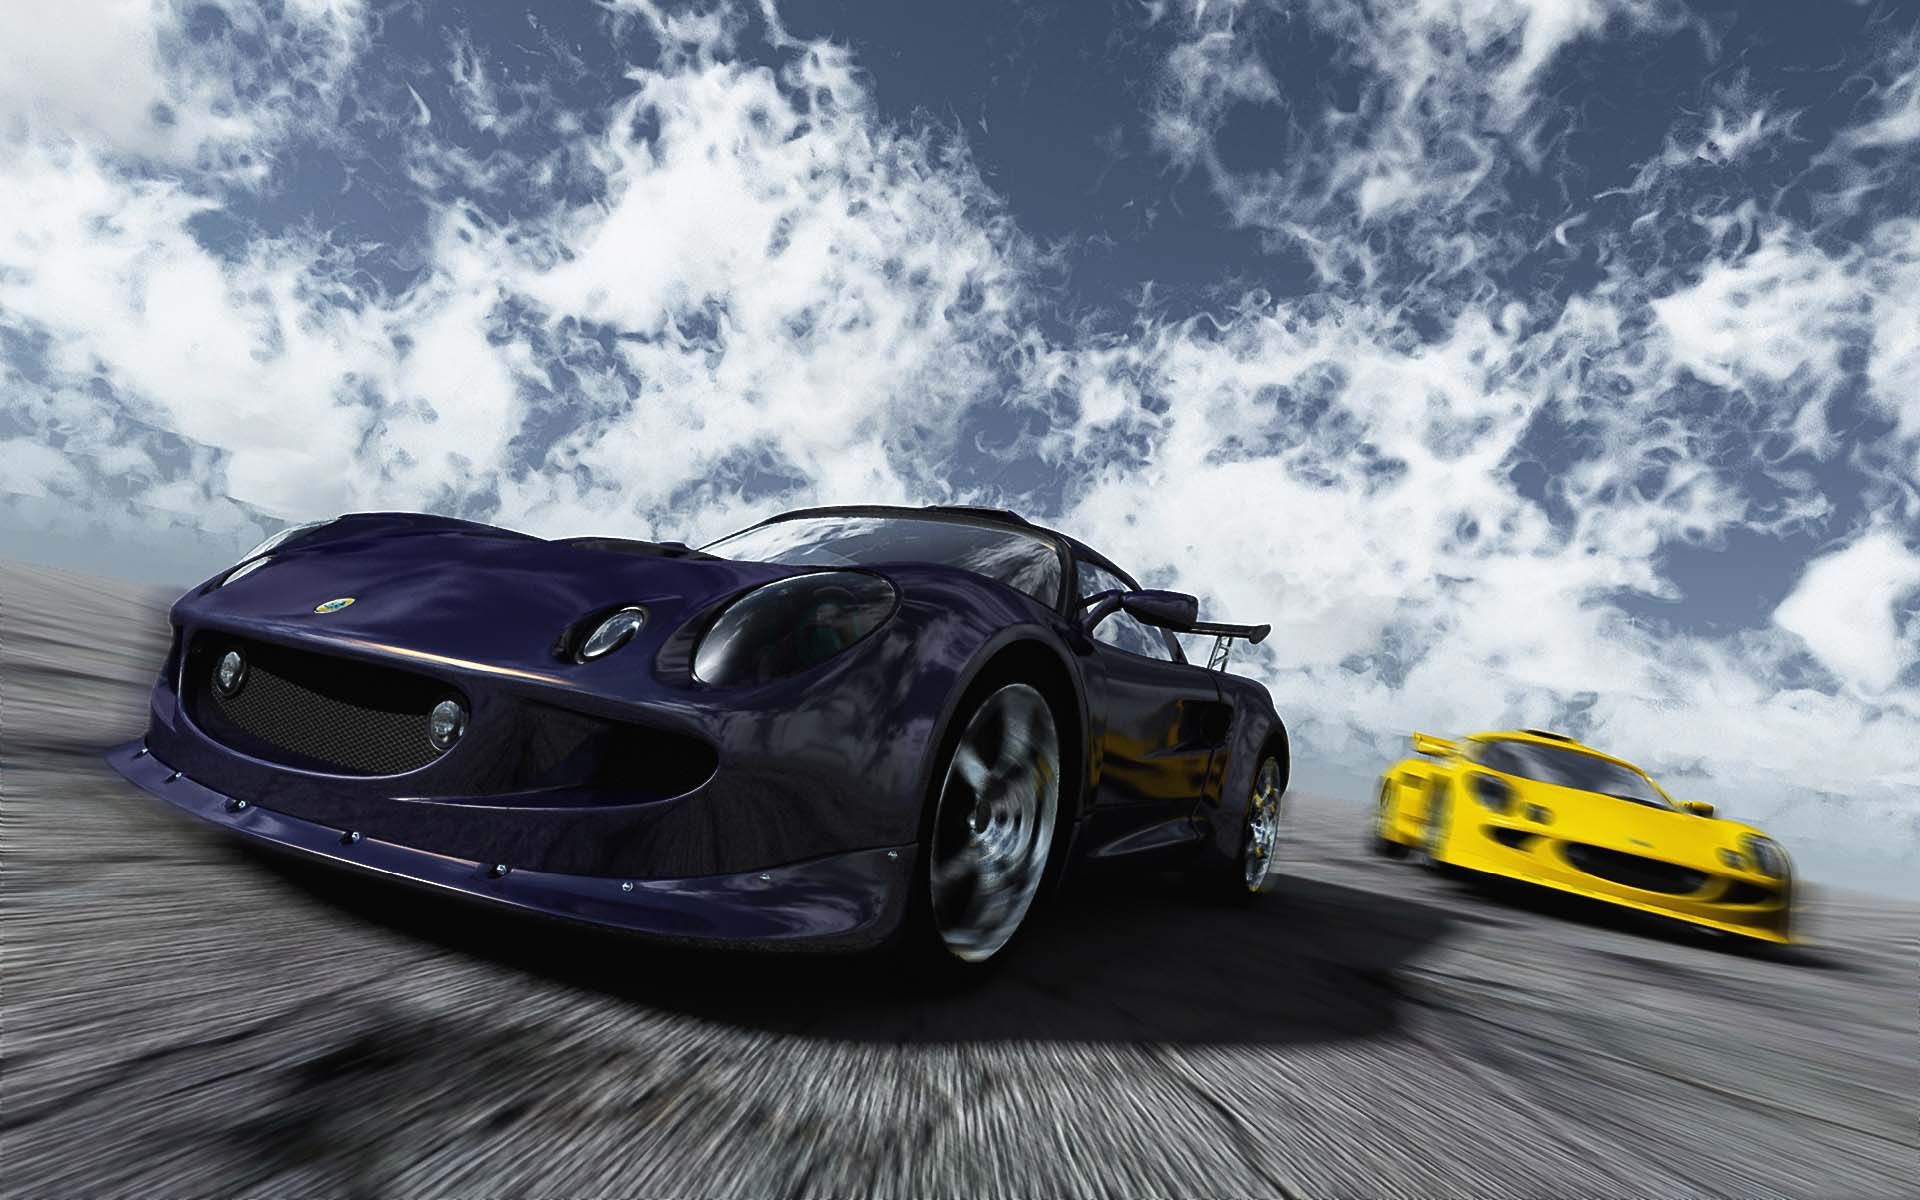 Racing Car In Action Wallpaper - Racing Cars Wallpapers Download Free - HD Wallpaper 